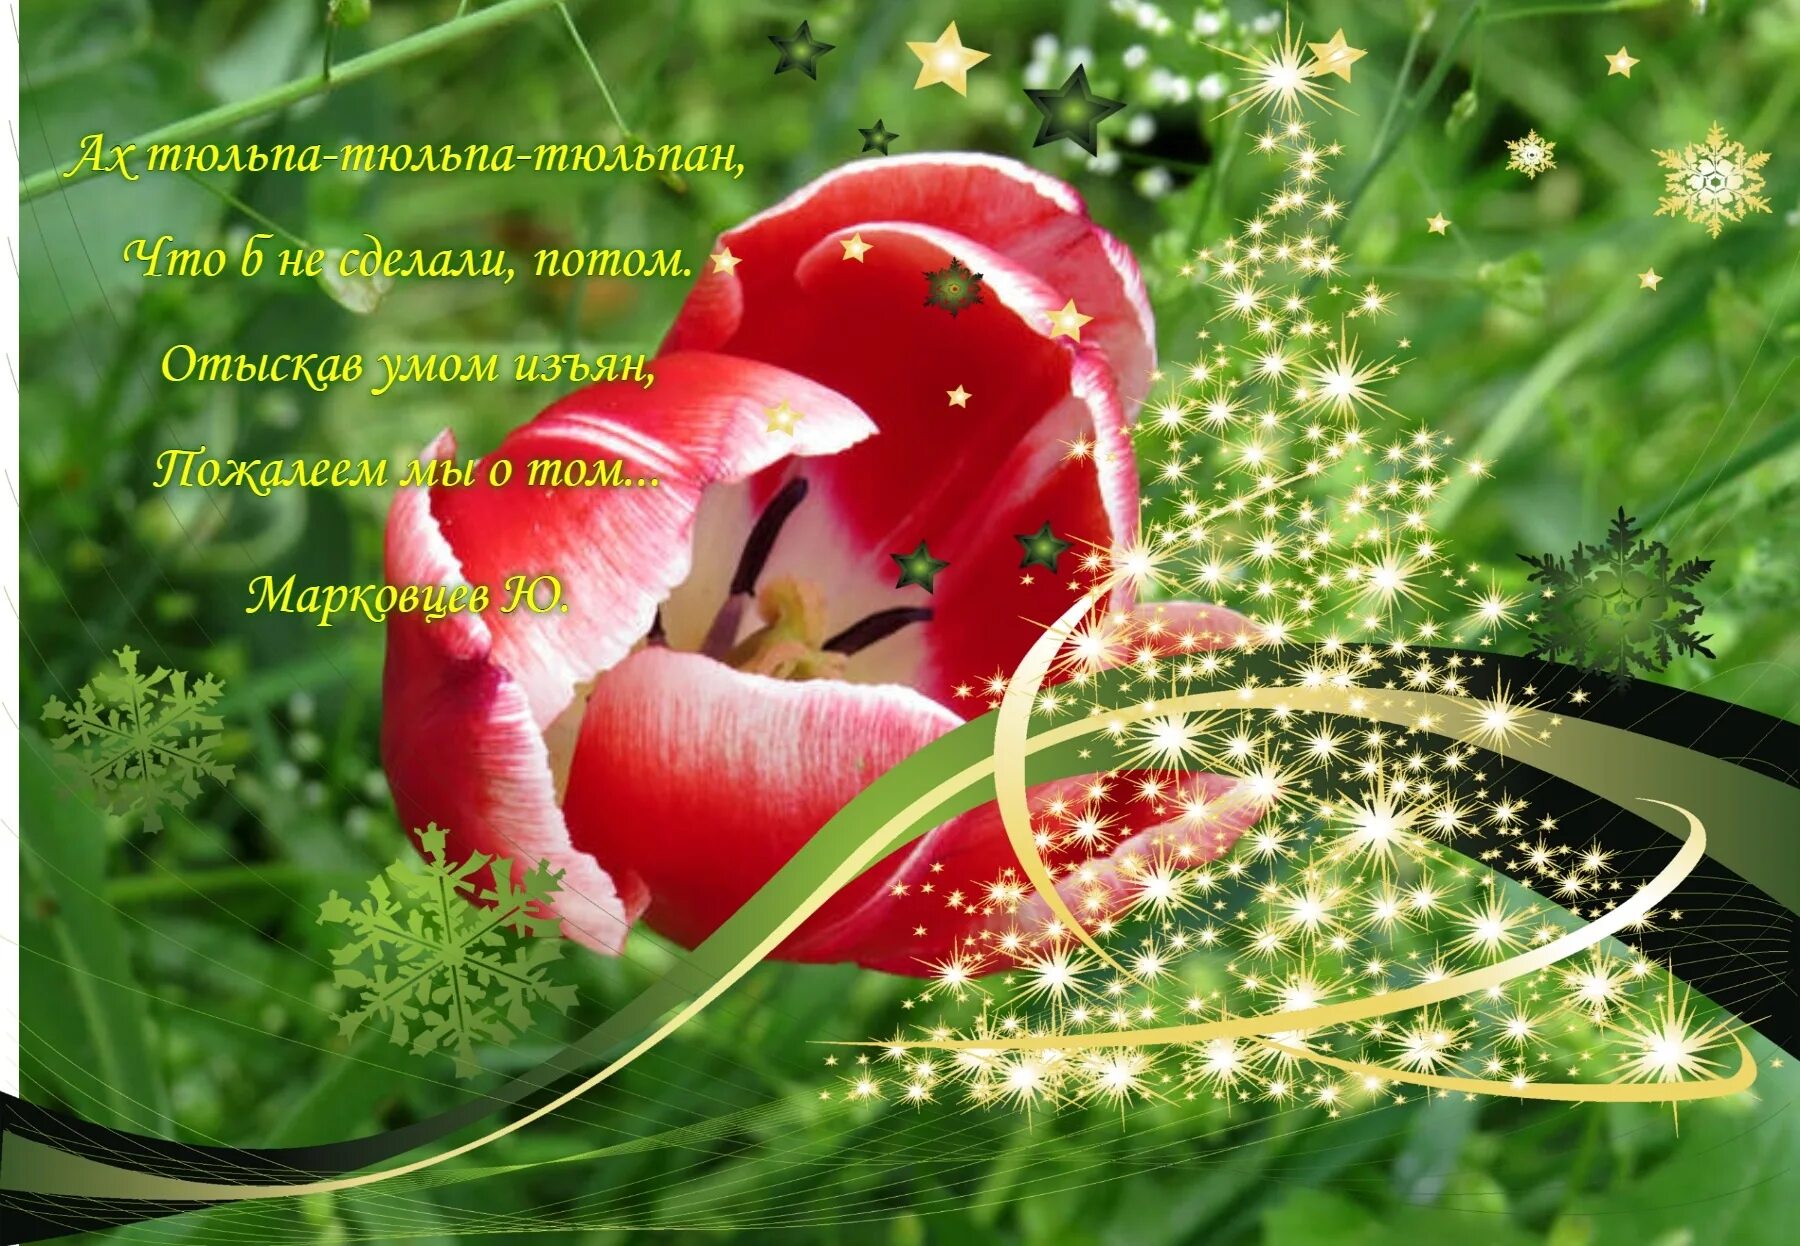 Стихи про тюльпаны. Красивые стихи про тюльпаны и весну. Весной тюльпаны стихи. Стихотворение про тюльпаны